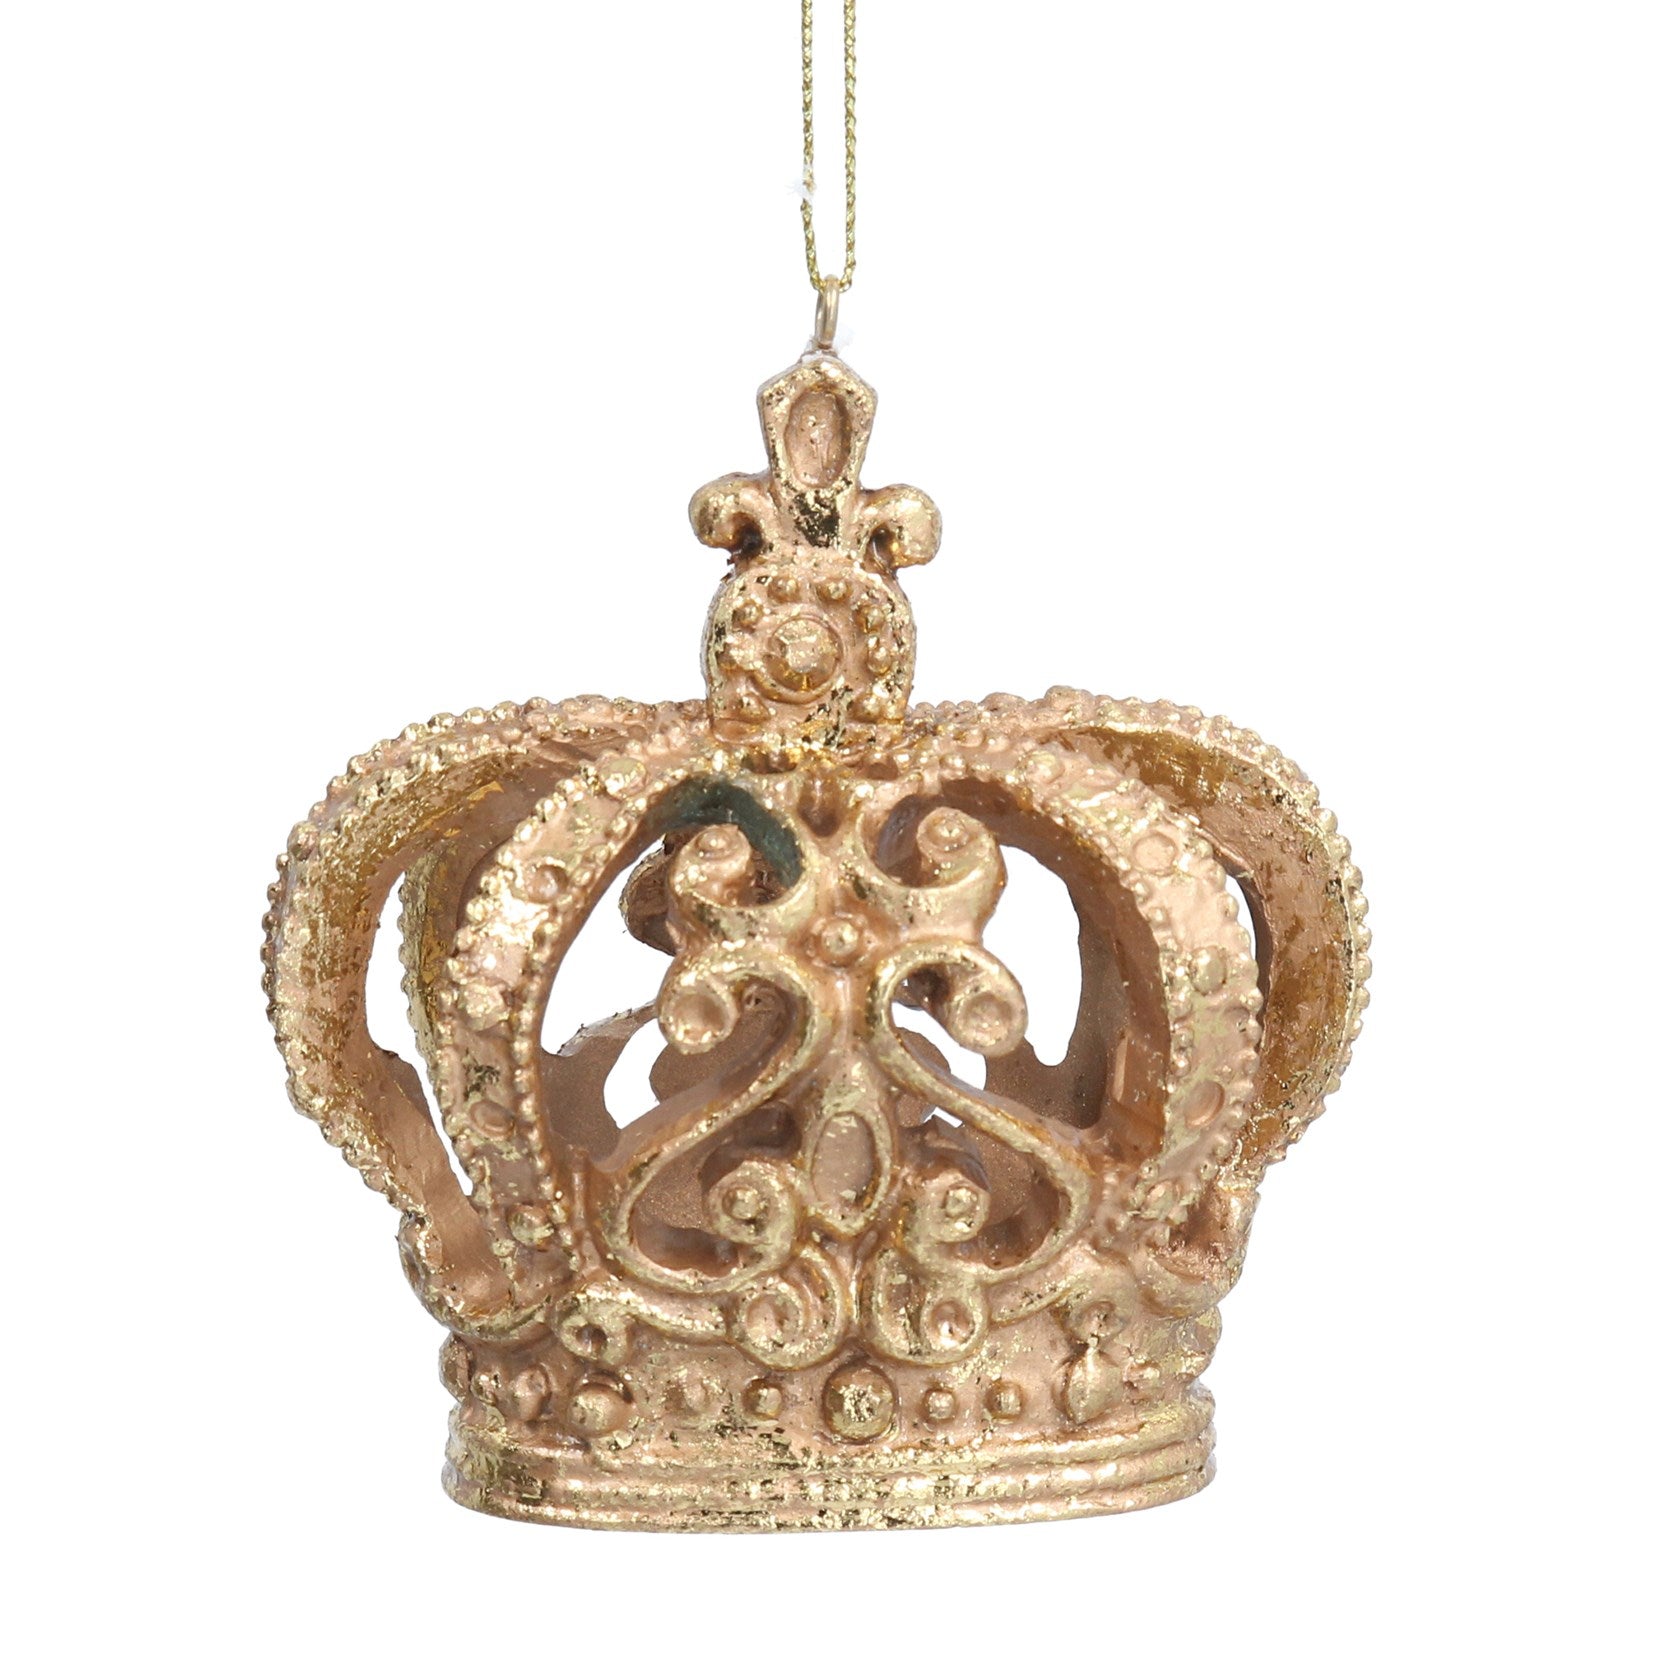 Hanging Gold Crown Decoration - Nostalgic